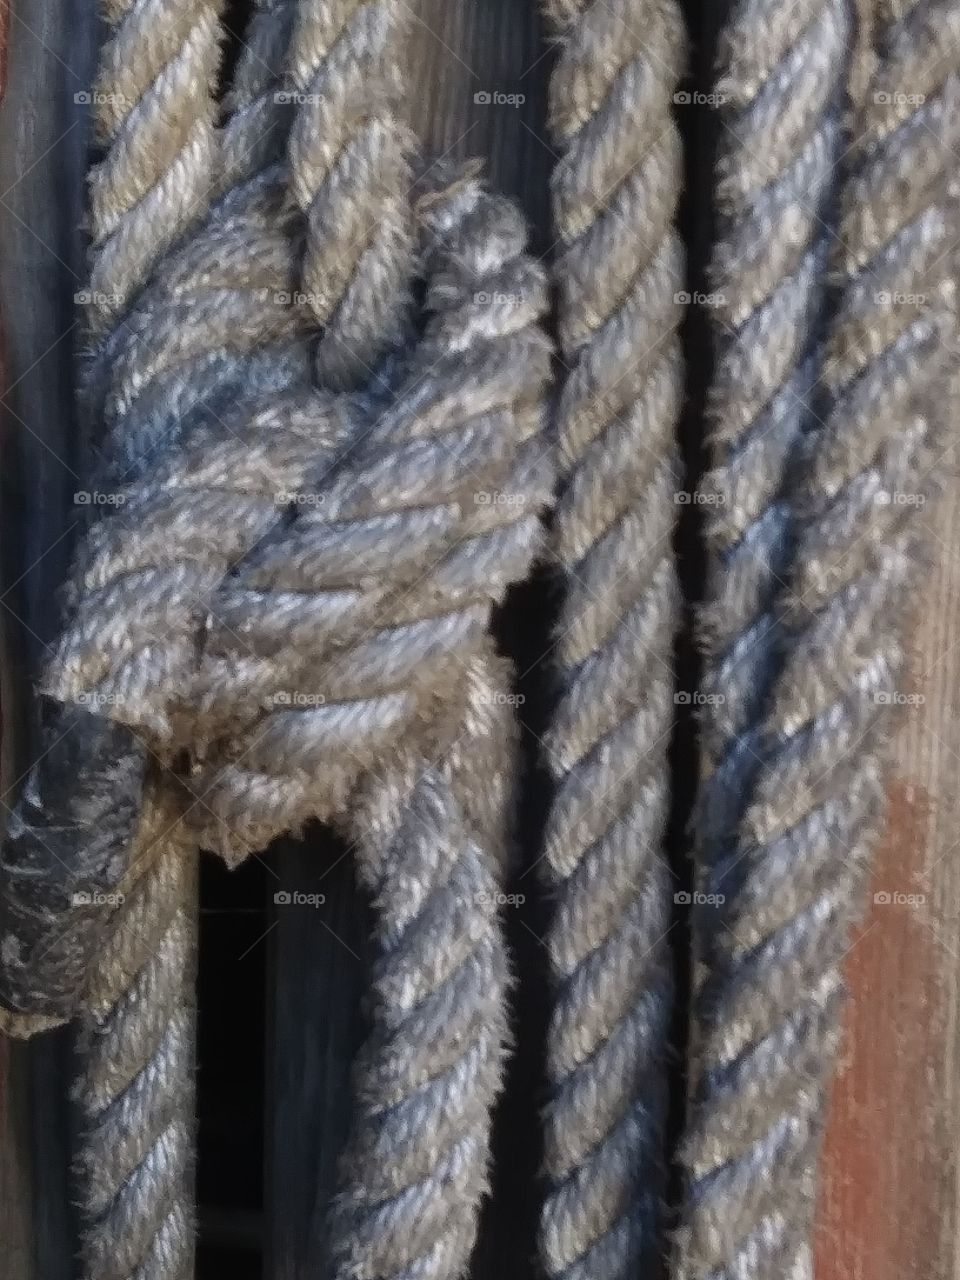 knots that bind